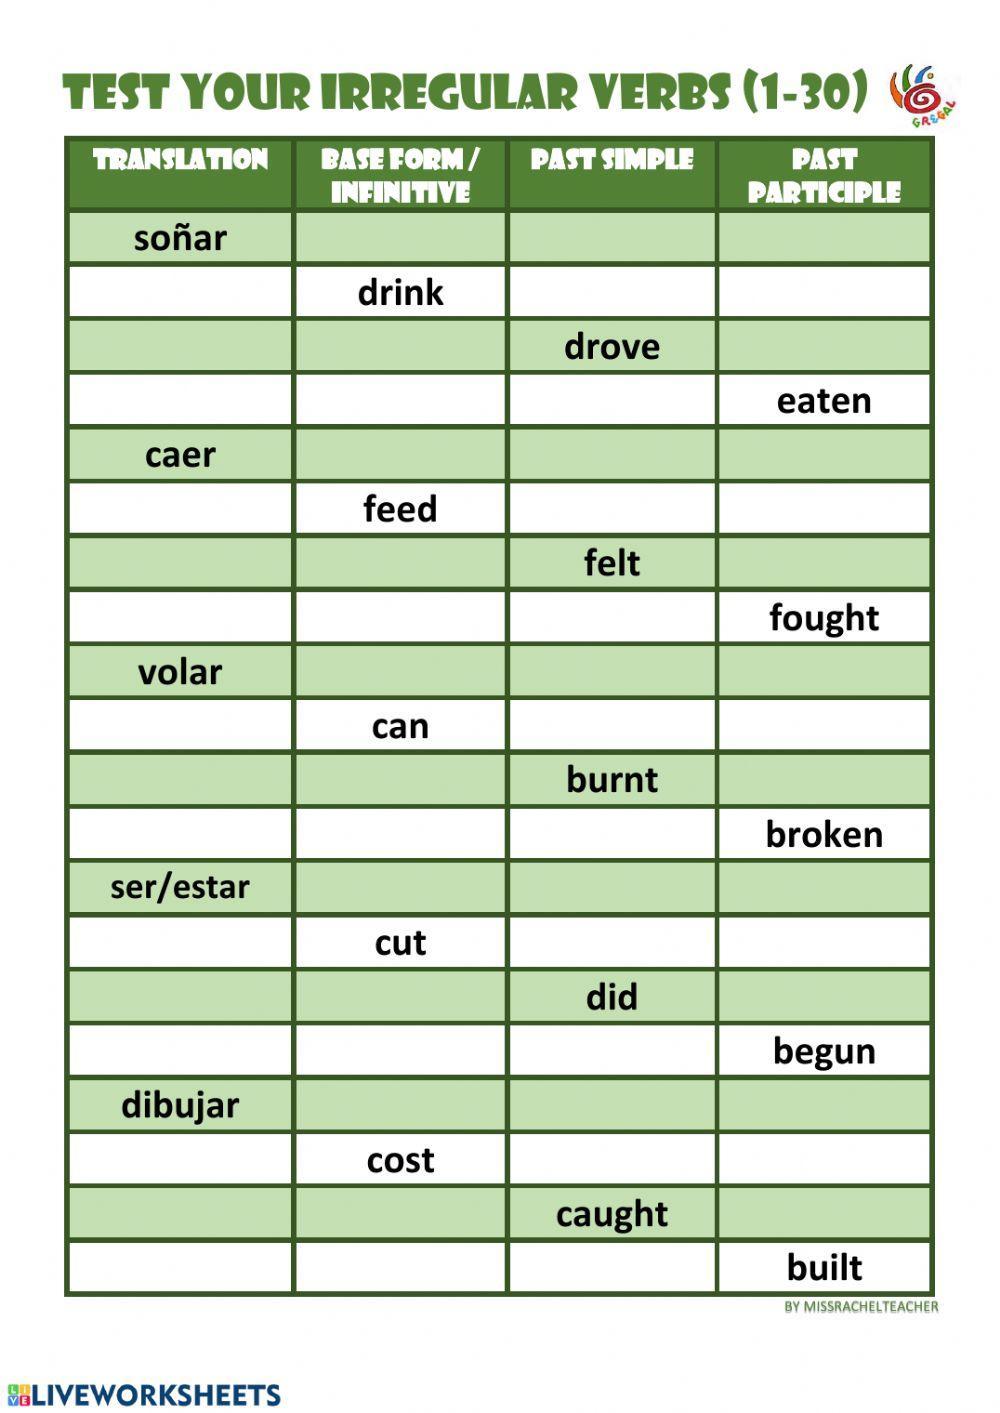 Test your irregular verbs 1-30